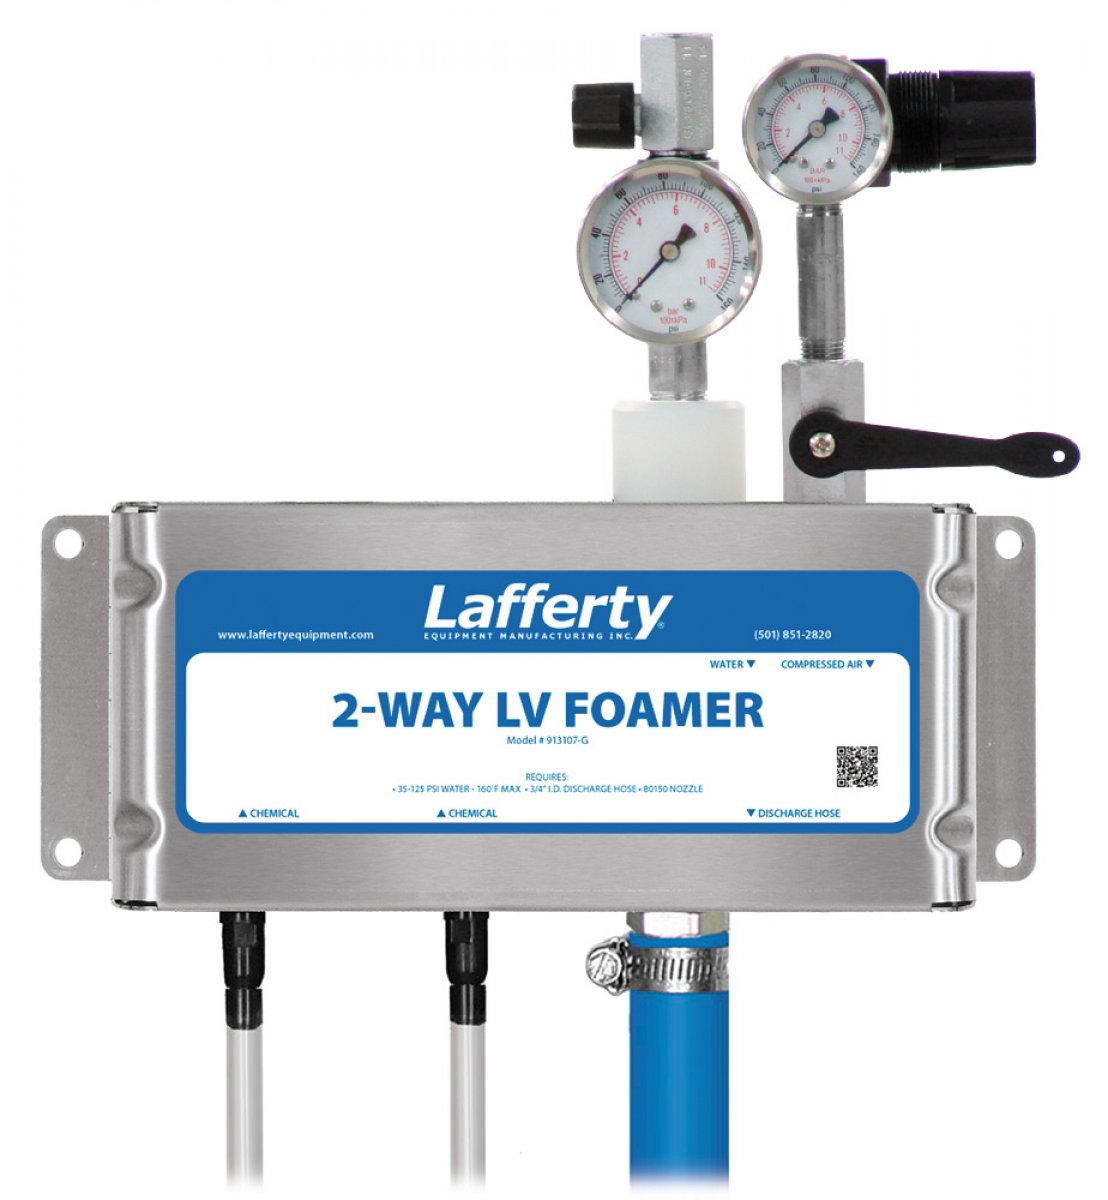 2-Way LV Foamer | Lafferty Equipment Manufacturing, Inc.